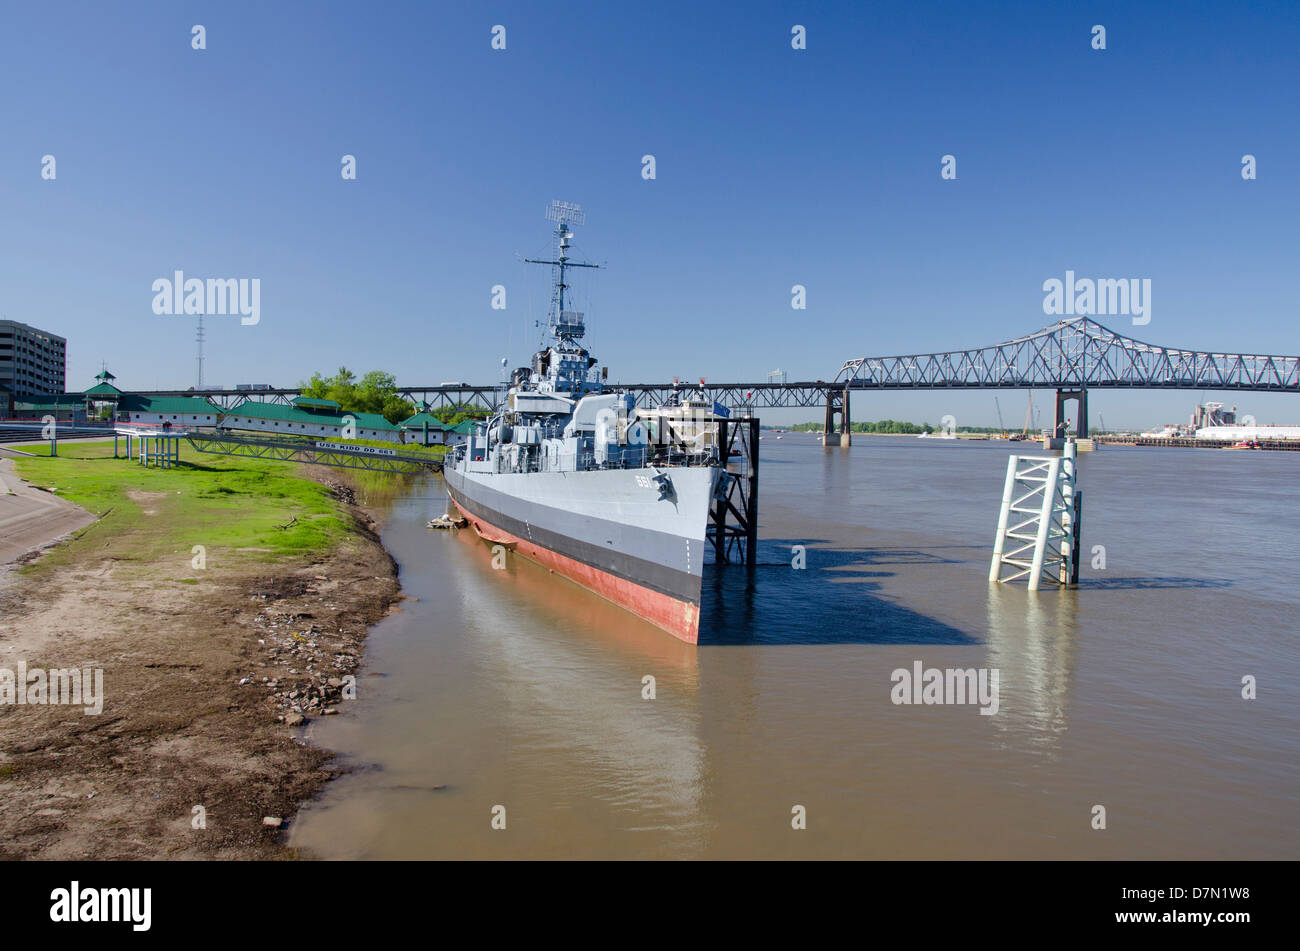 Louisiana, Baton Rouge. Mississippi River port area. USS Kidd Veterans Memorial. World War II Fletcher class destroyer. Stock Photo